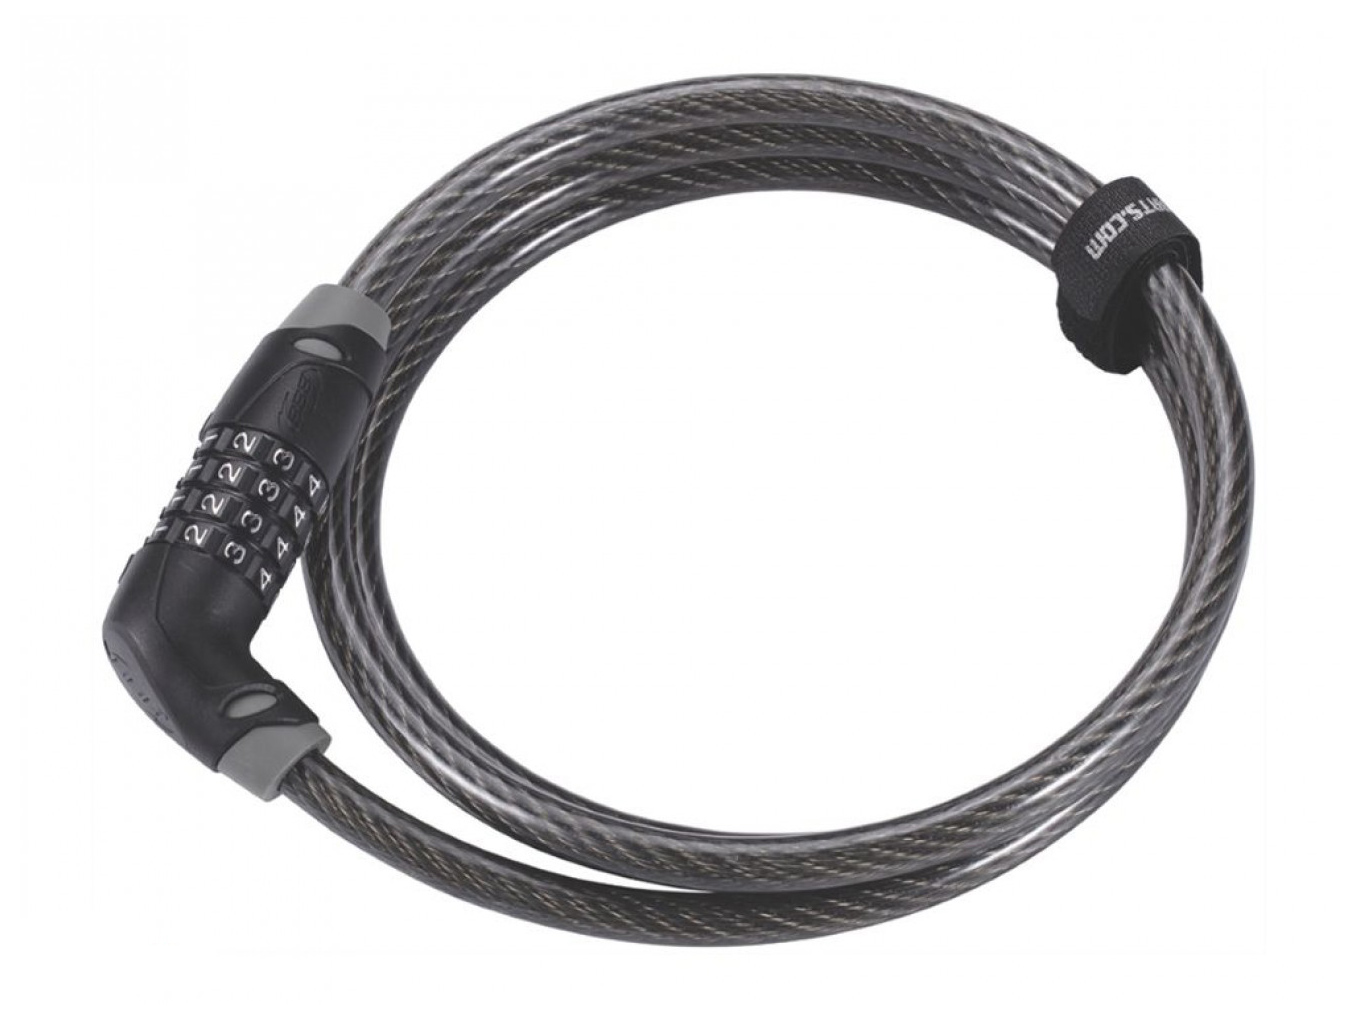  Кодовый замок для велосипеда BBB BBL-66 QuickCode Coil cable 8mm x 1200mm